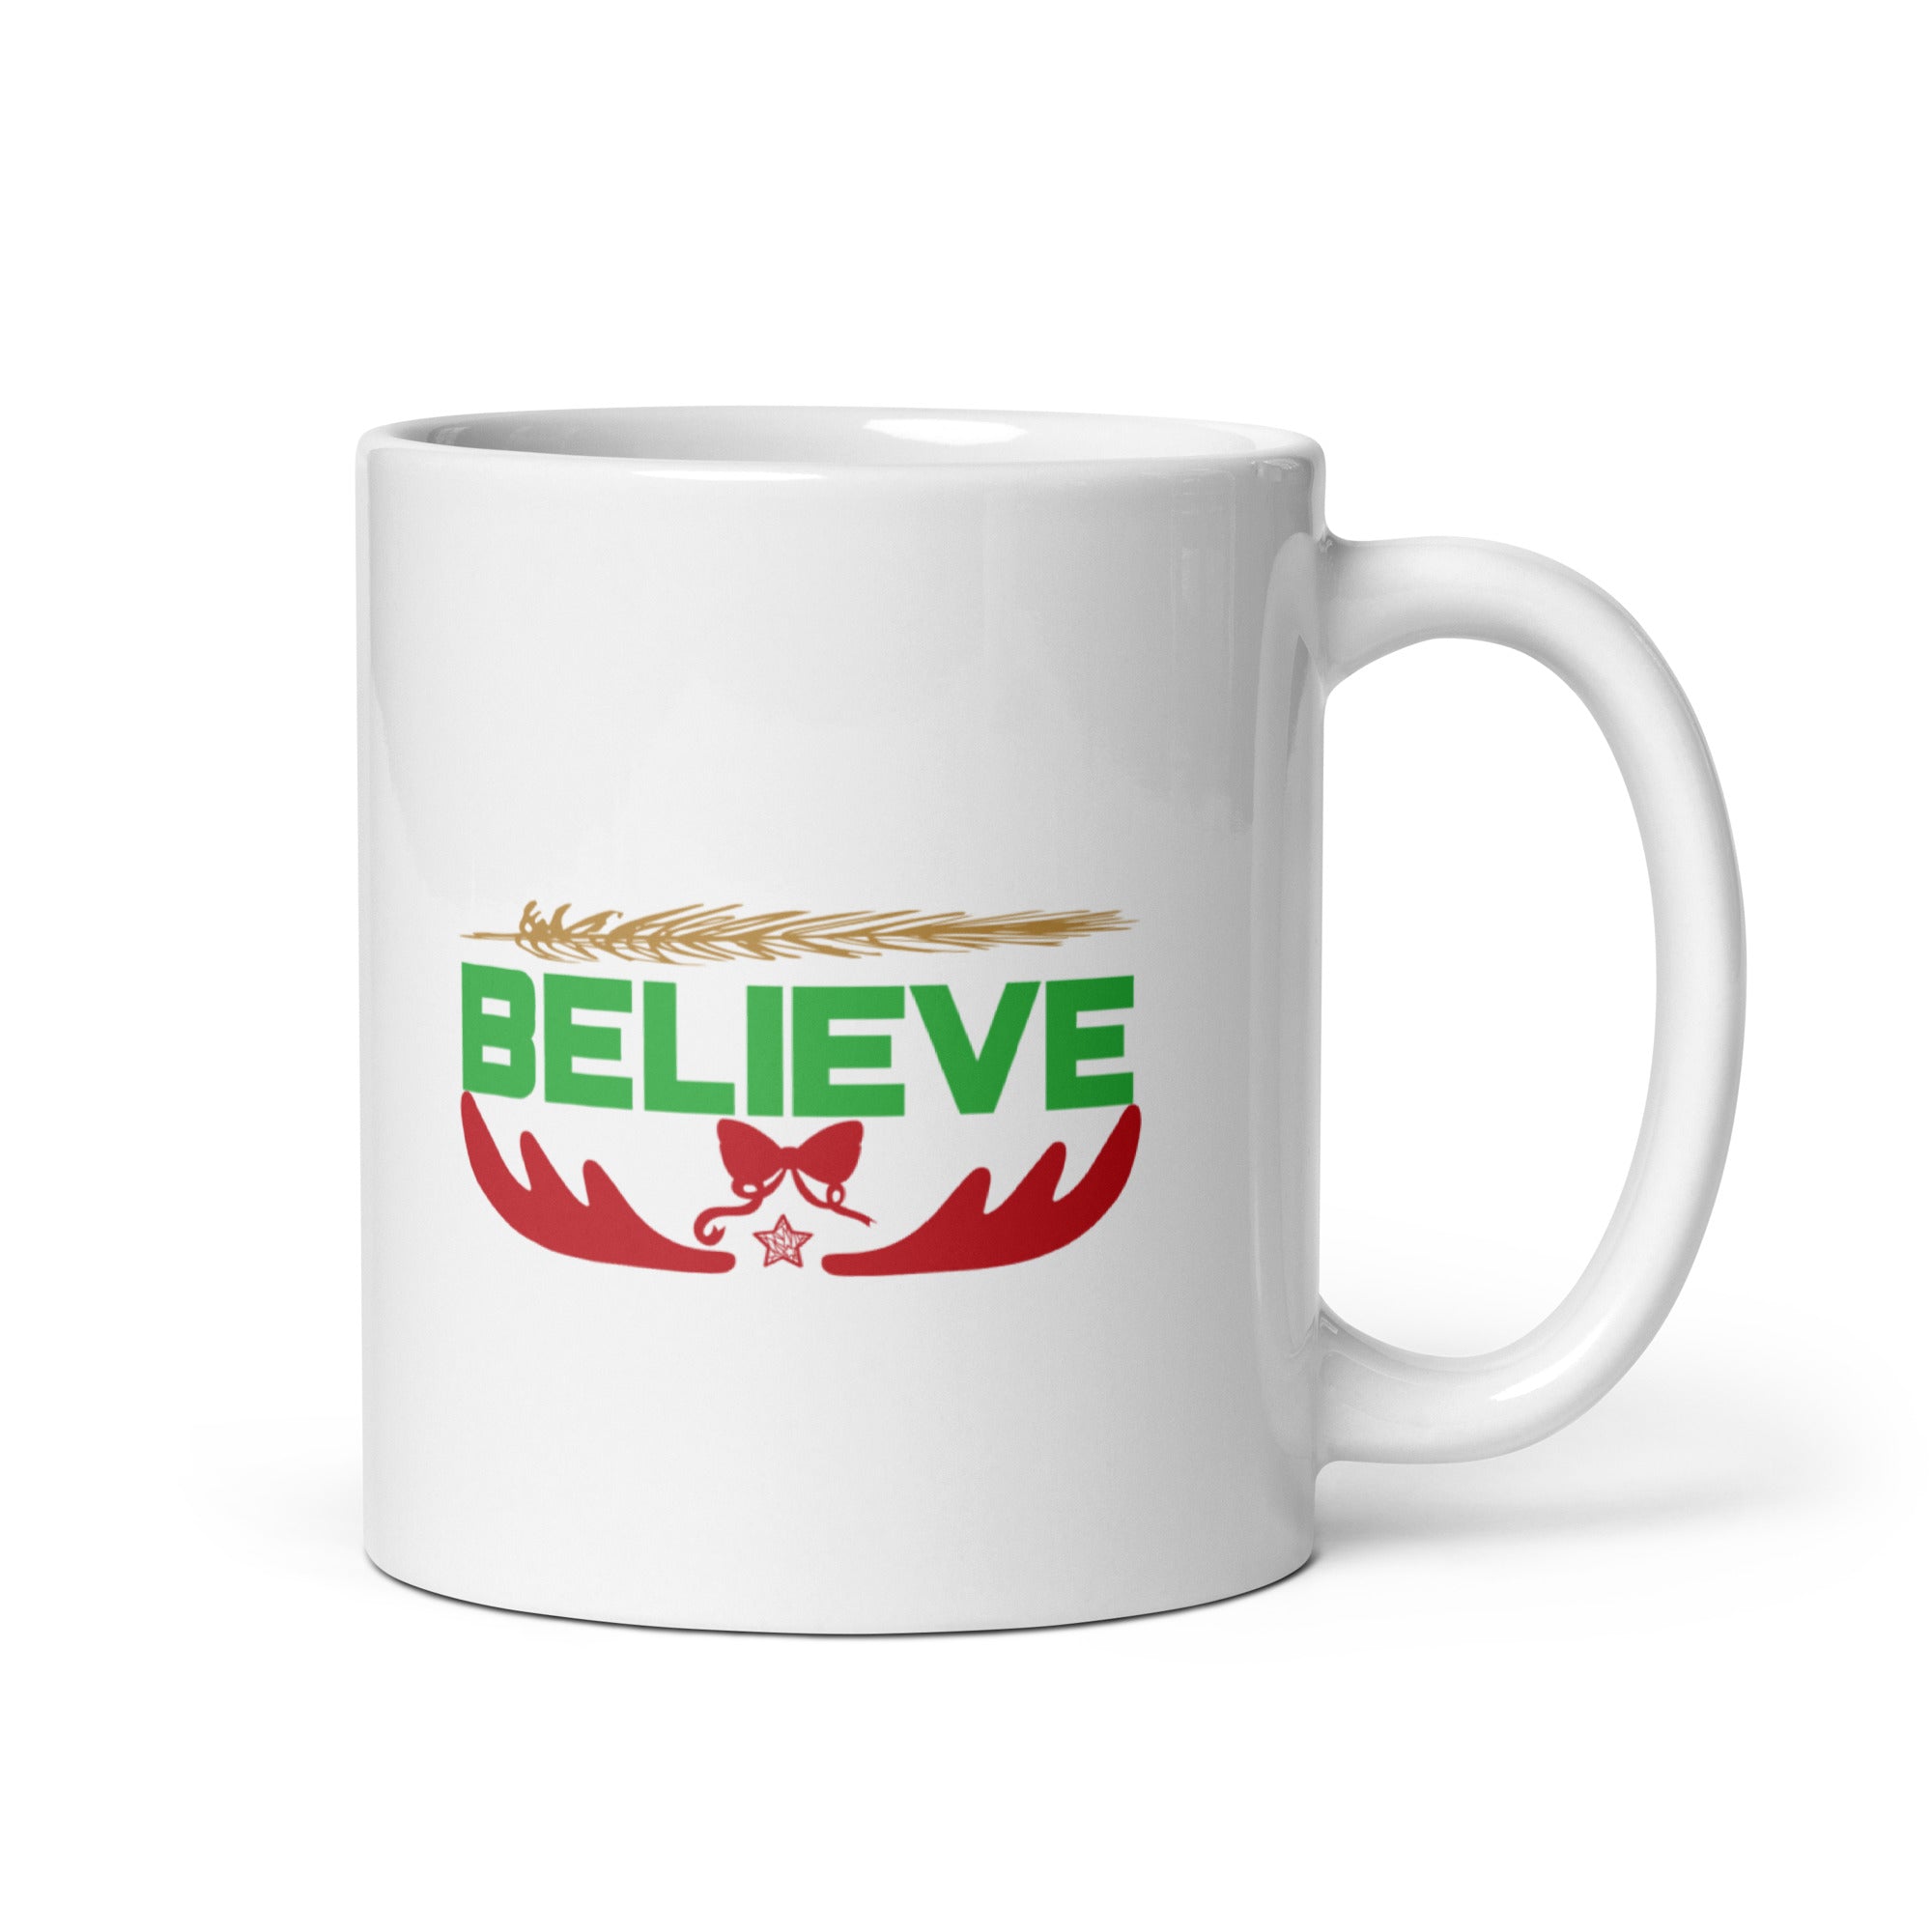 Believe - White glossy mug